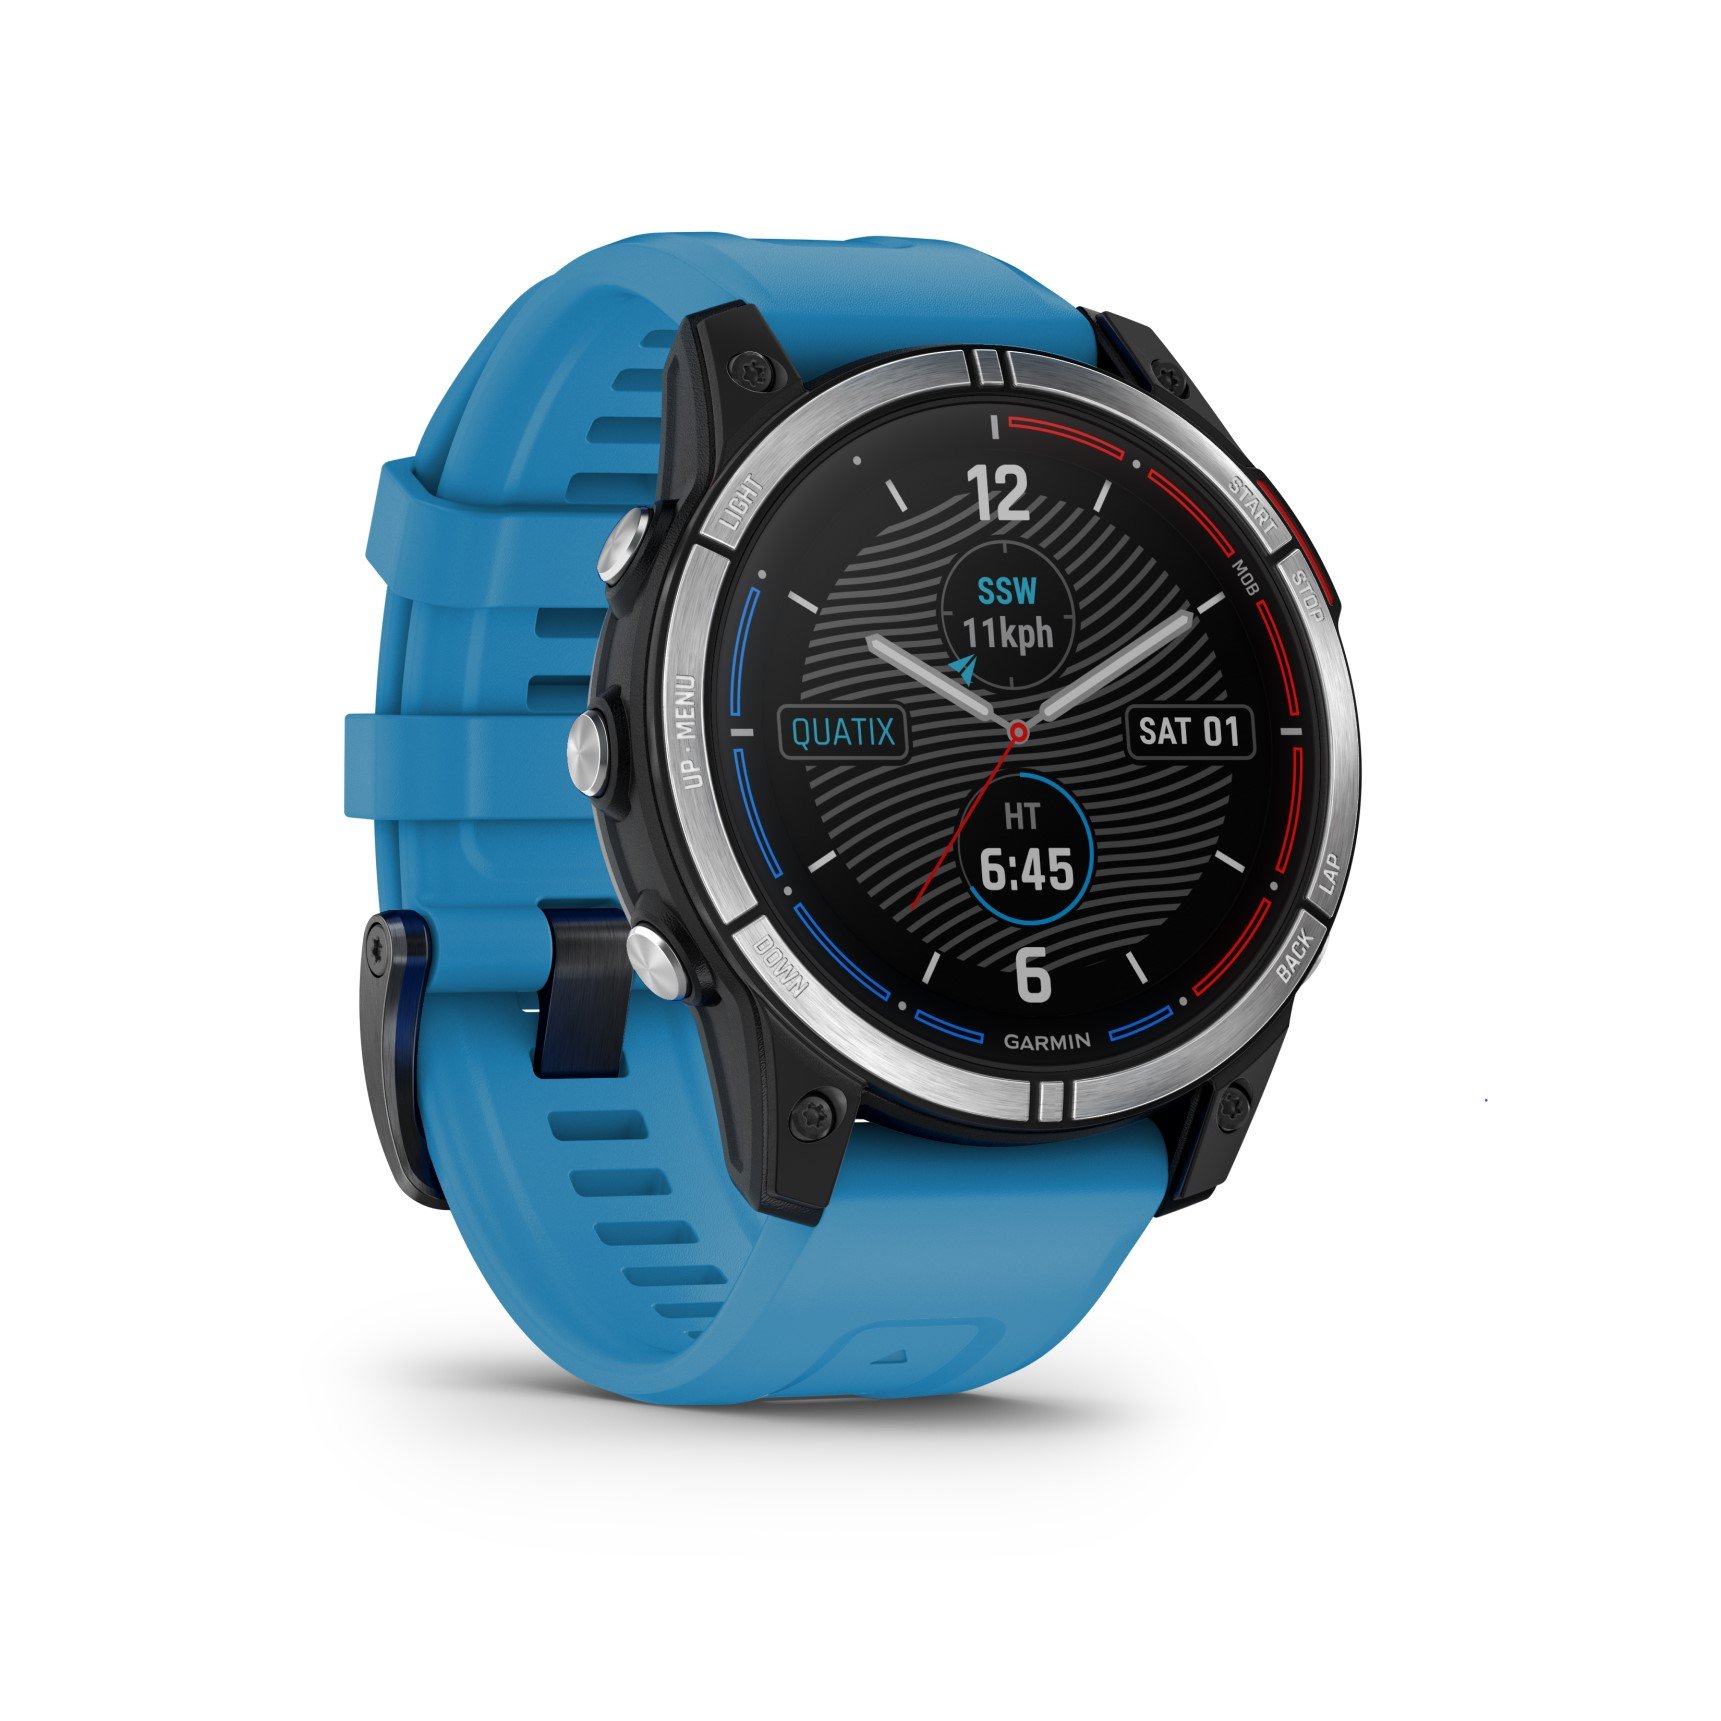 Garmin announces the quatix 7 smartwatches for boaters